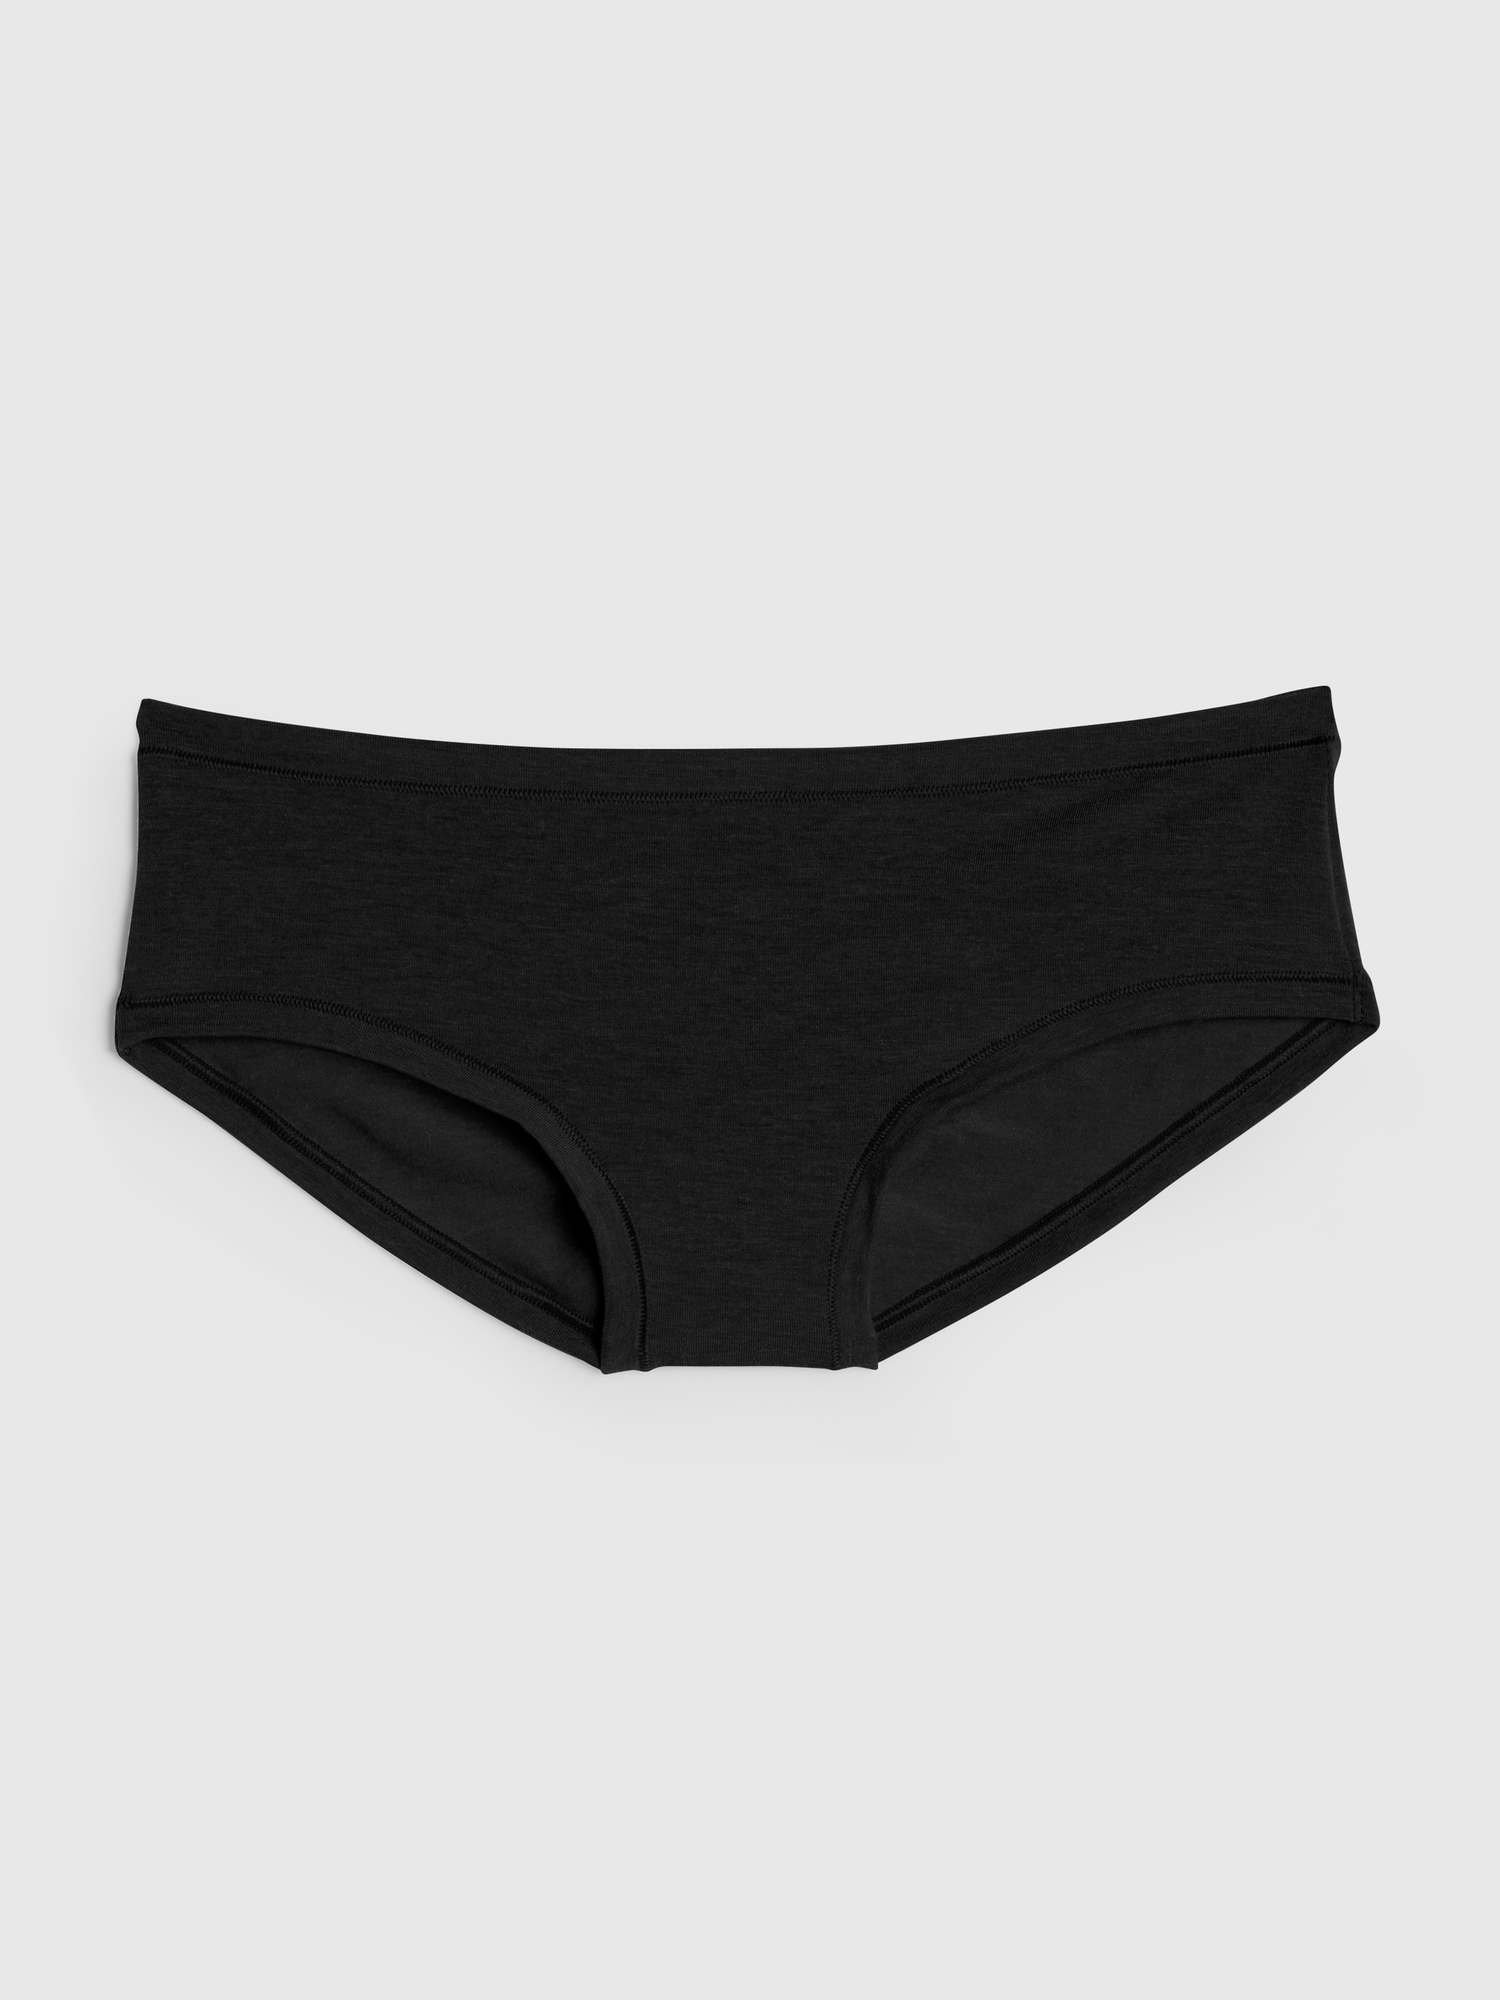 NWT Gap Body Ladies Xl Black velour sexy Underwear Panties RTL